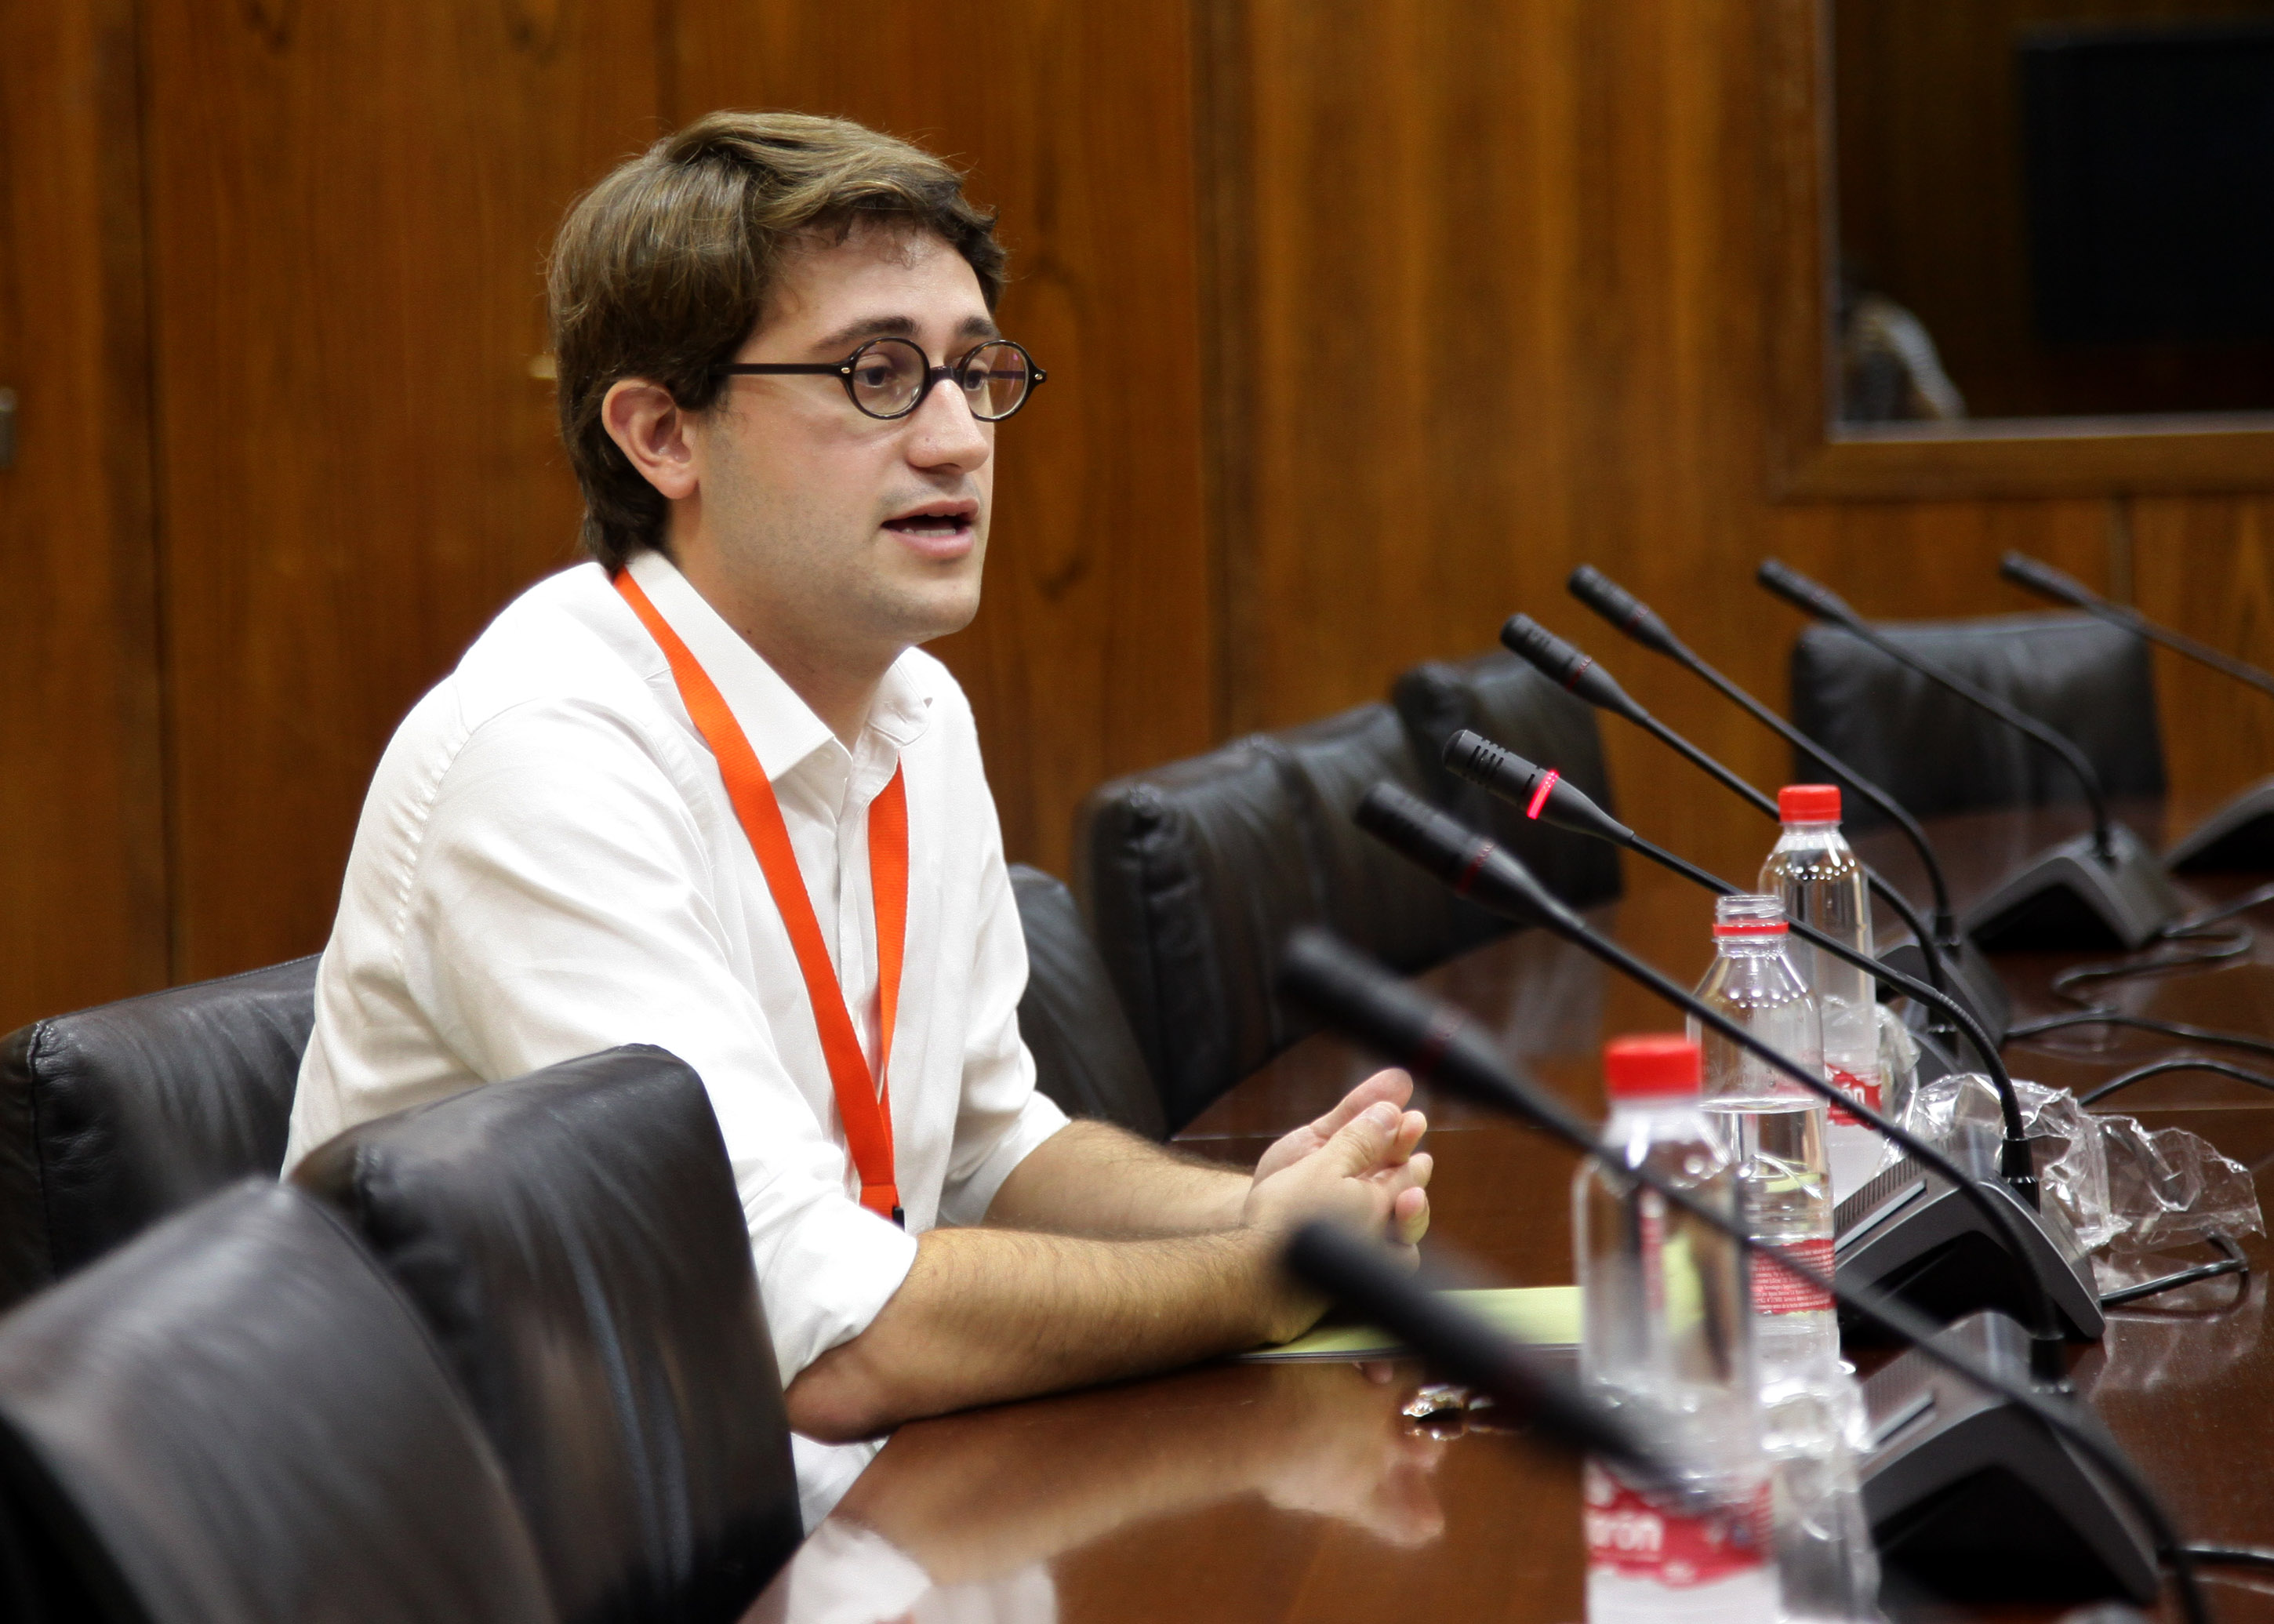  Rafael lvarez, del Consejo de la Juventud de Andaluca